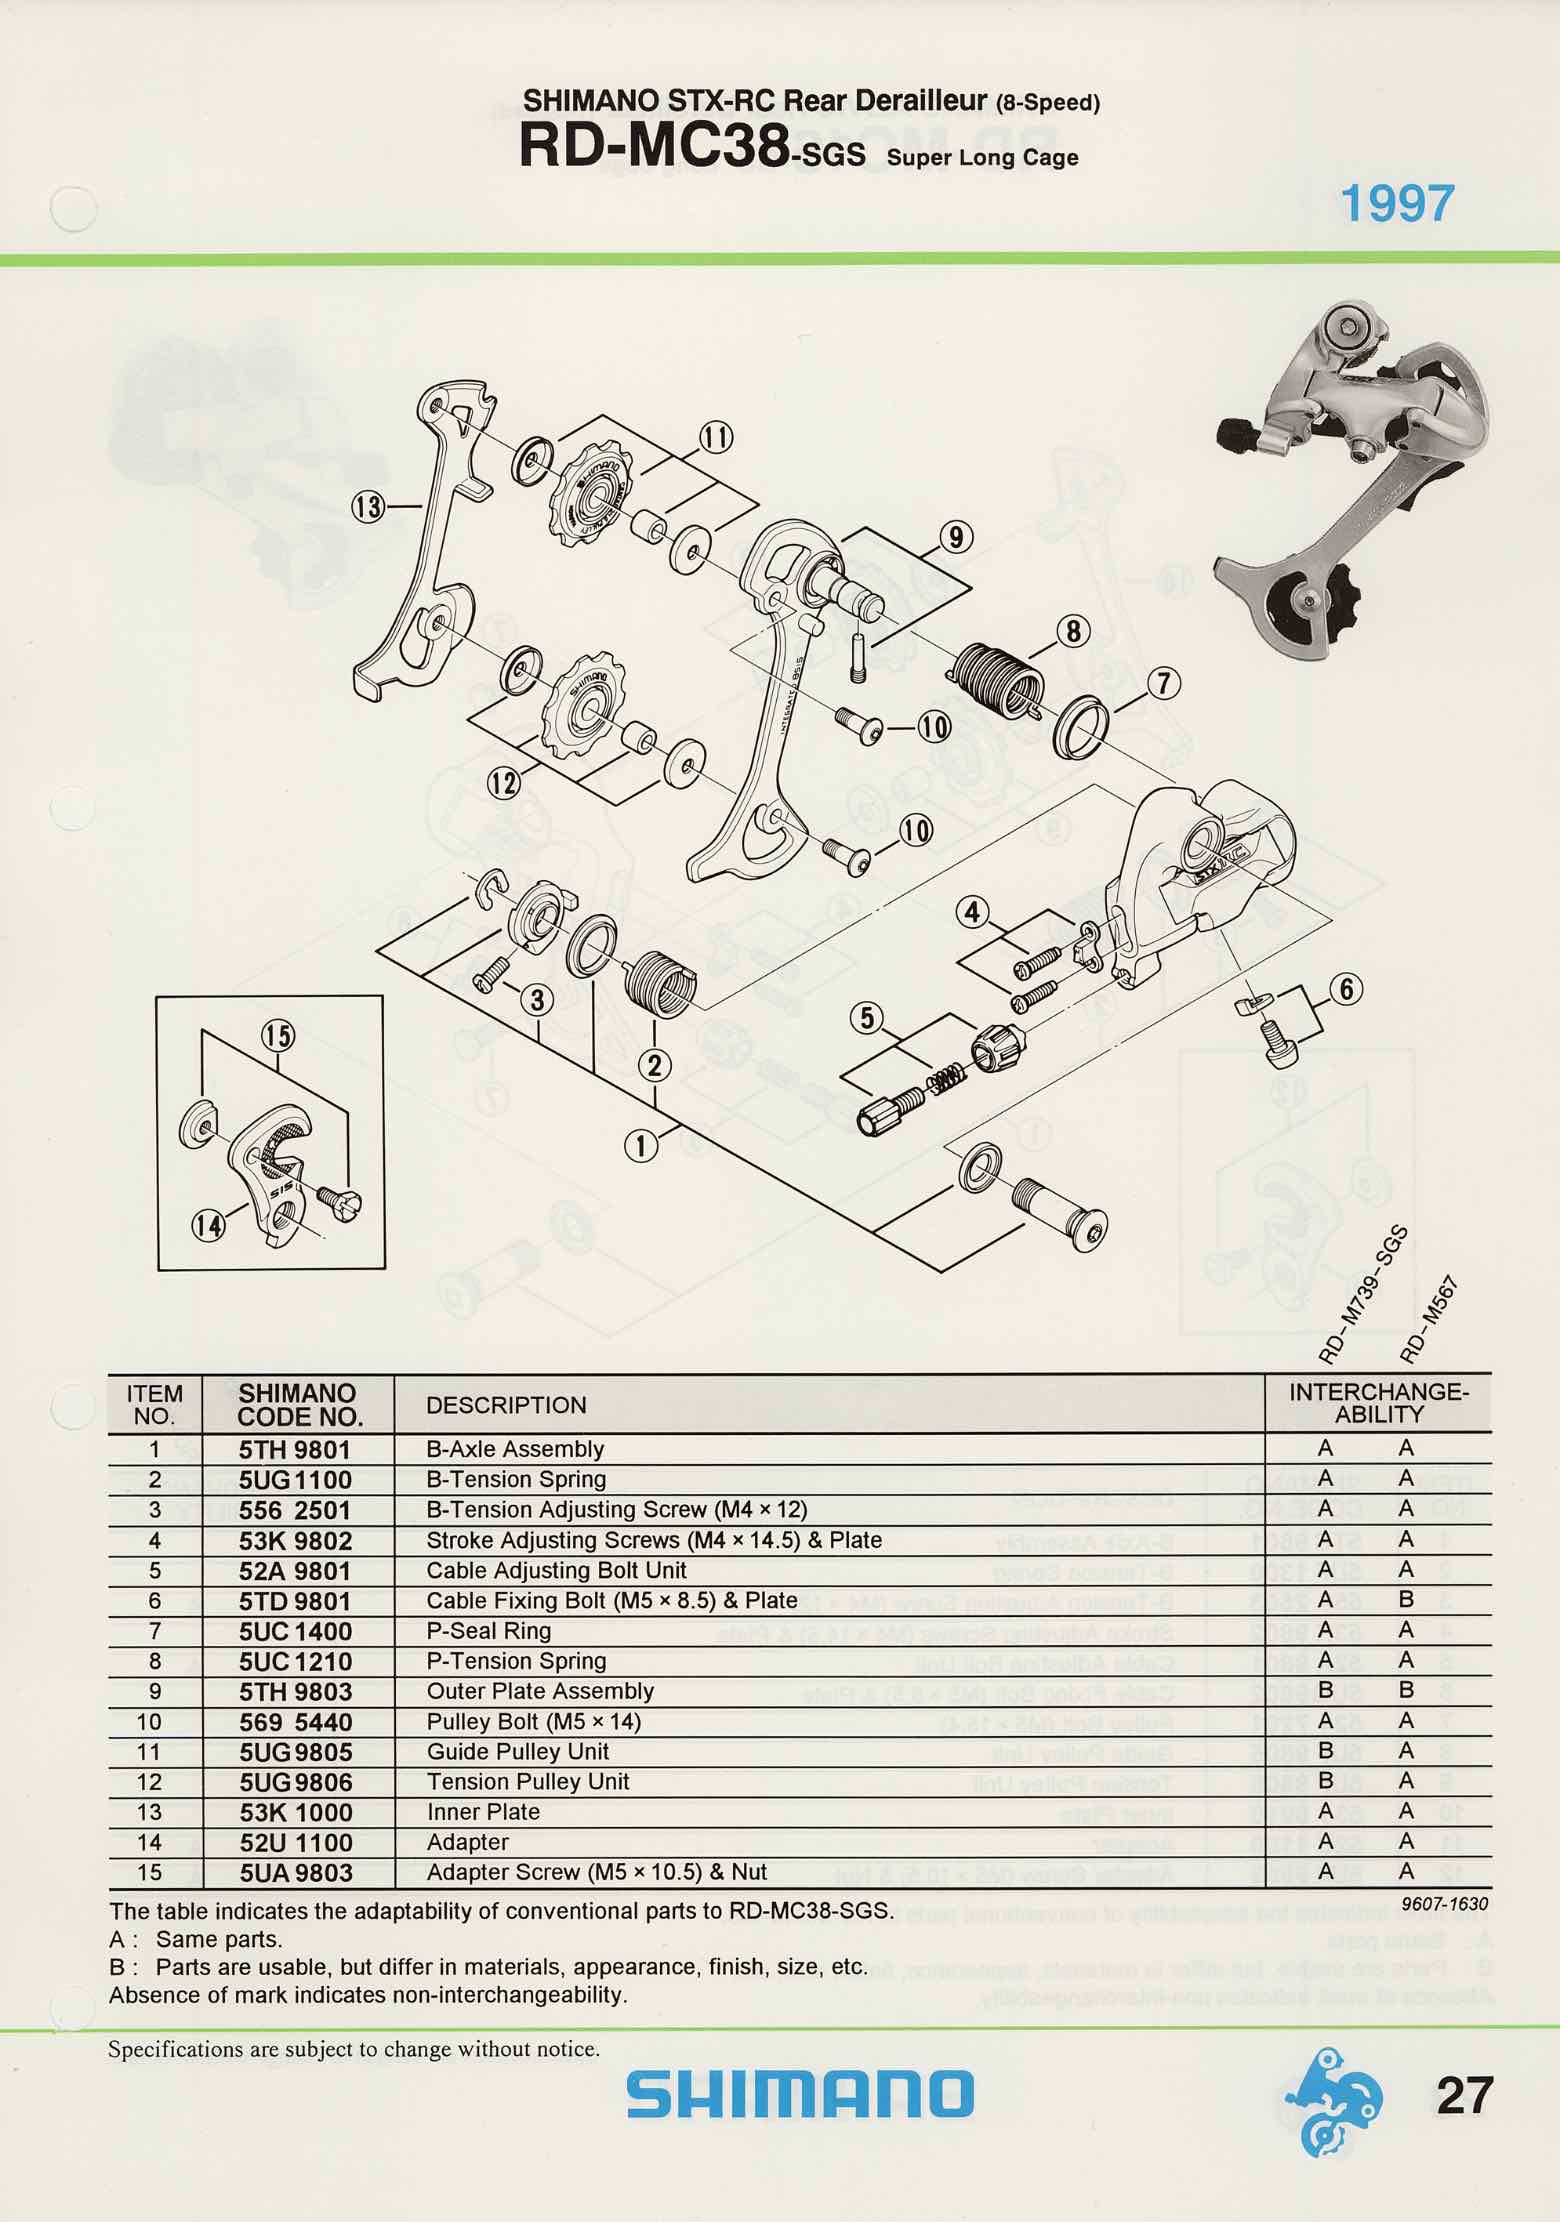 Shimano Spare Parts Catalogue - 1994 to 2004 s5 p27 main image